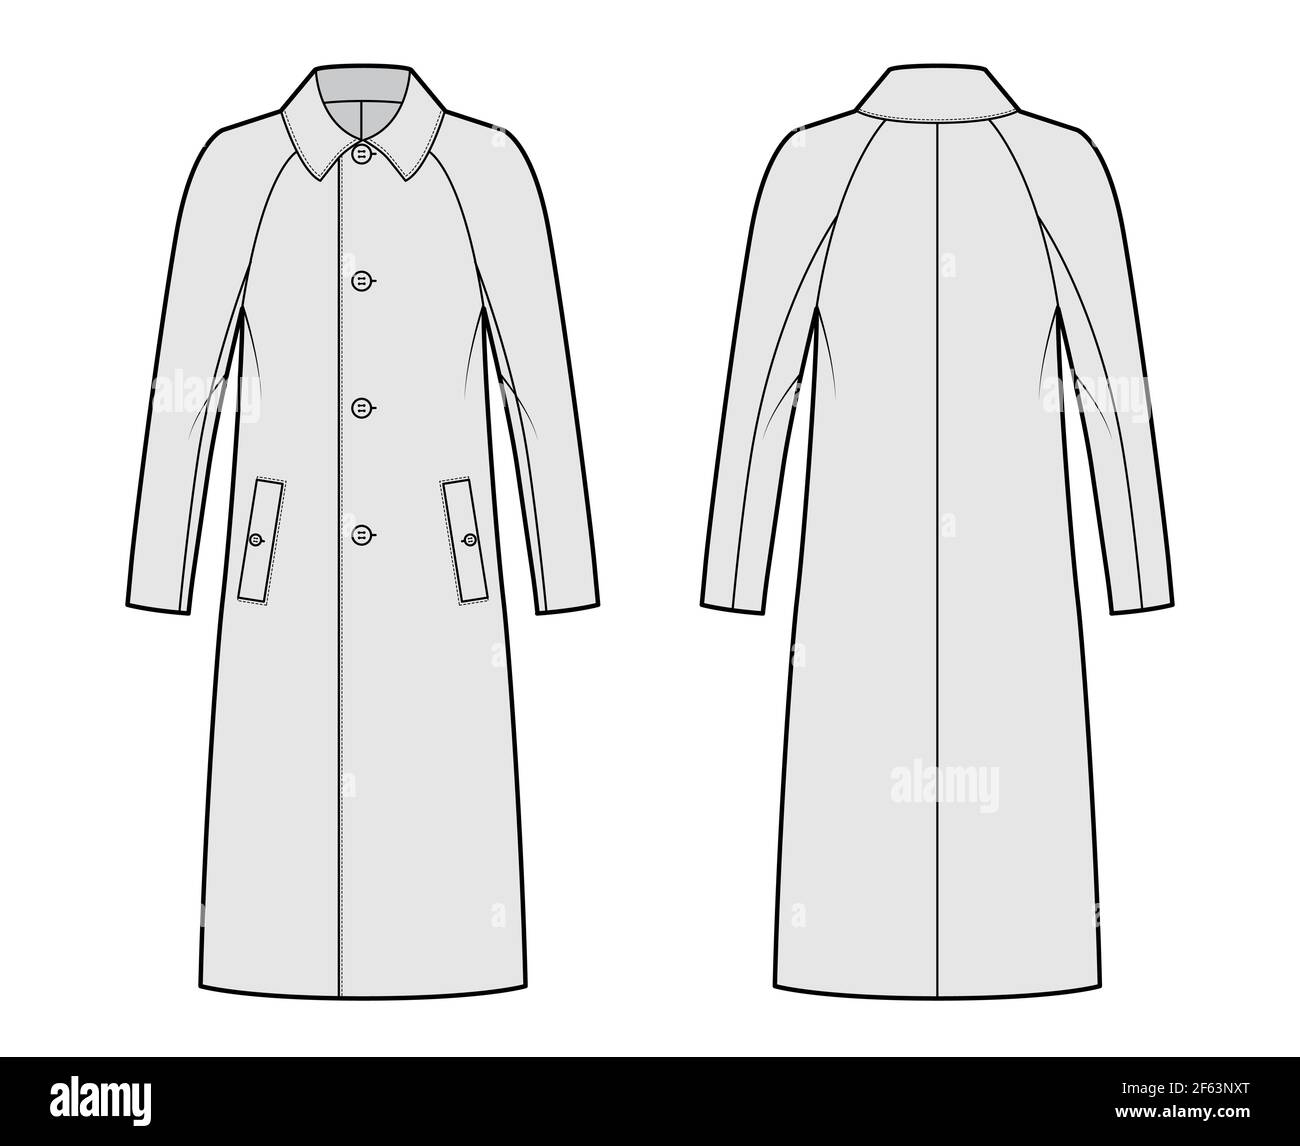 Balmacaan coat technical fashion illustration with raglan long sleeves ...